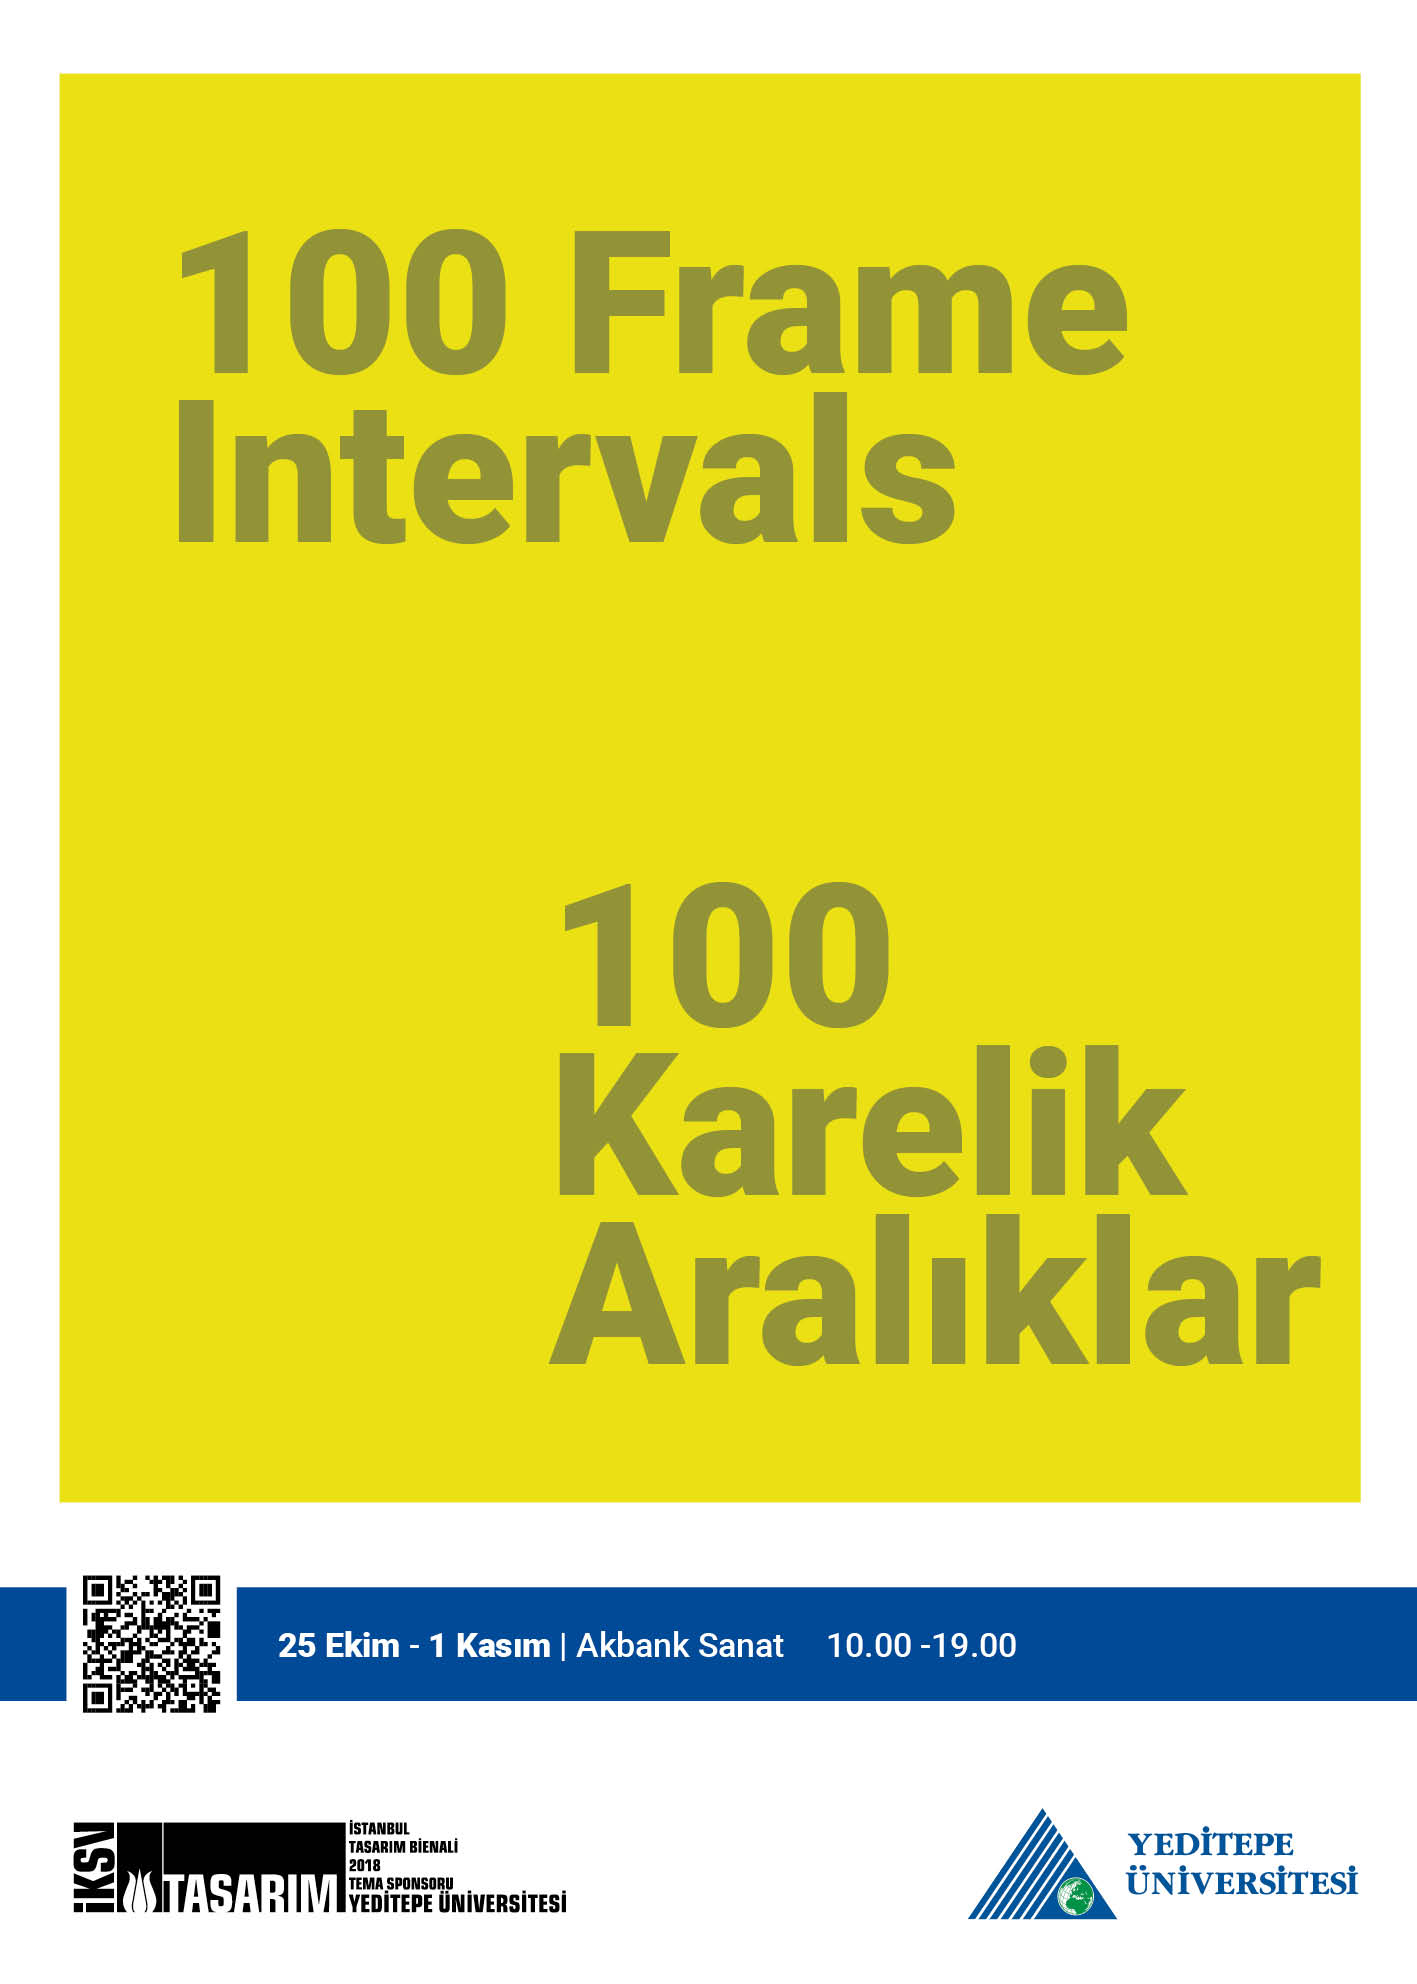 100 Frame Intervals / 4th Istanbul Design Biennial